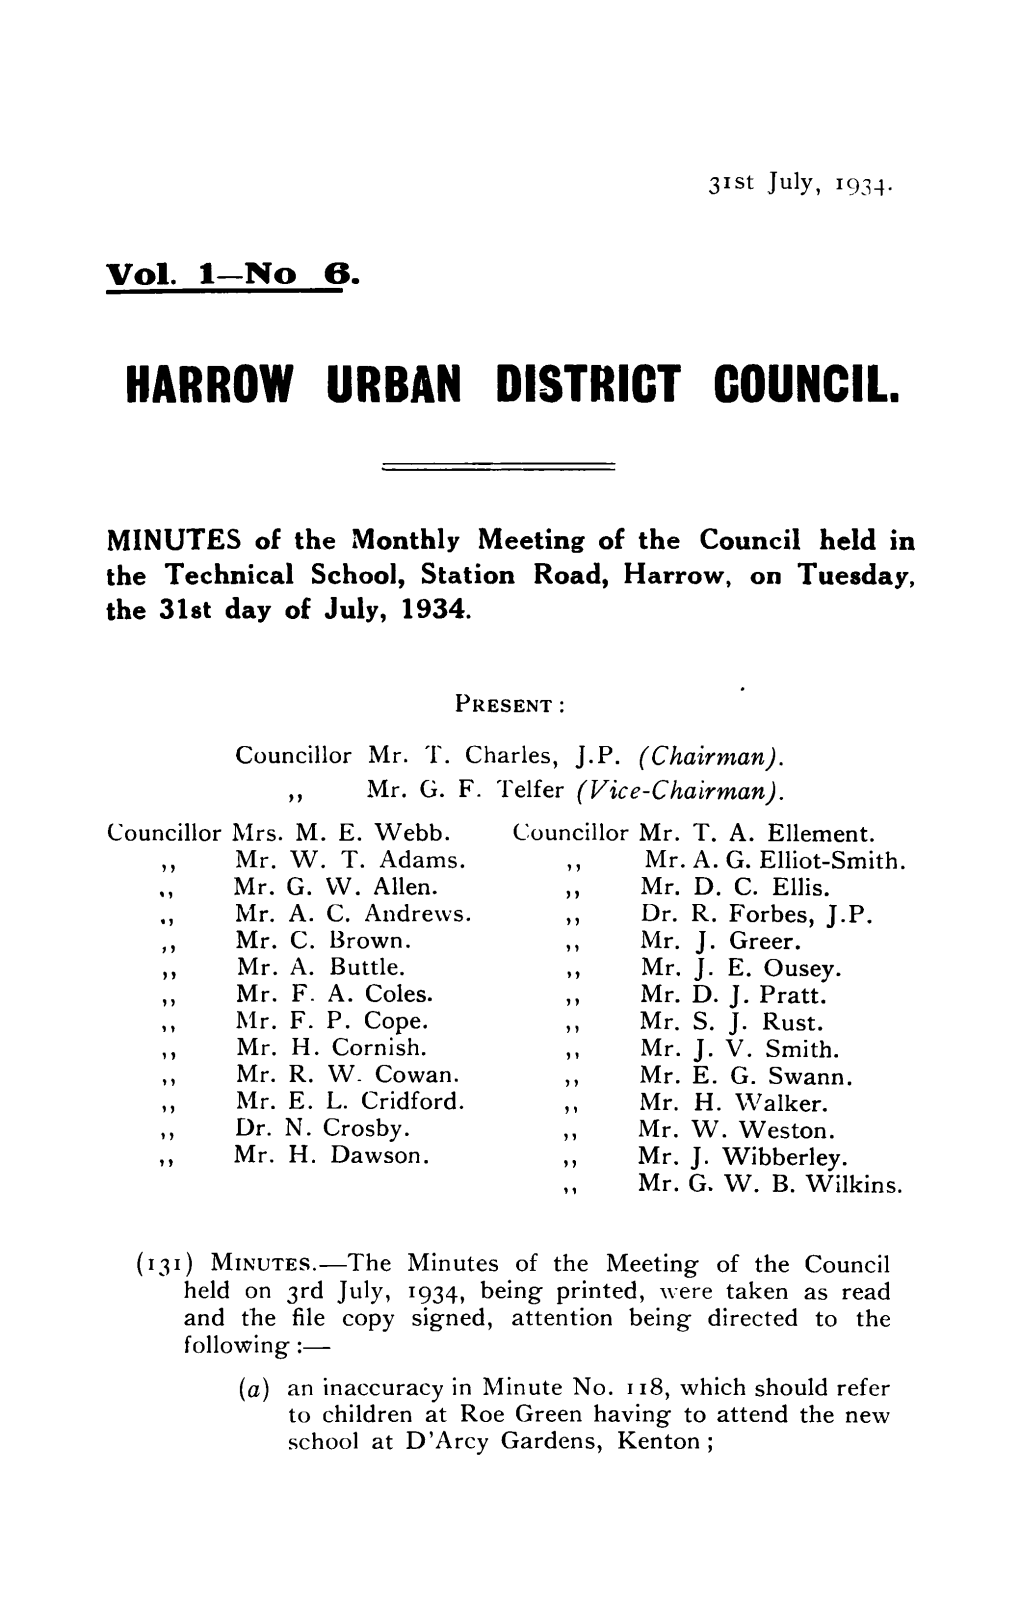 Harrow Urban District Council